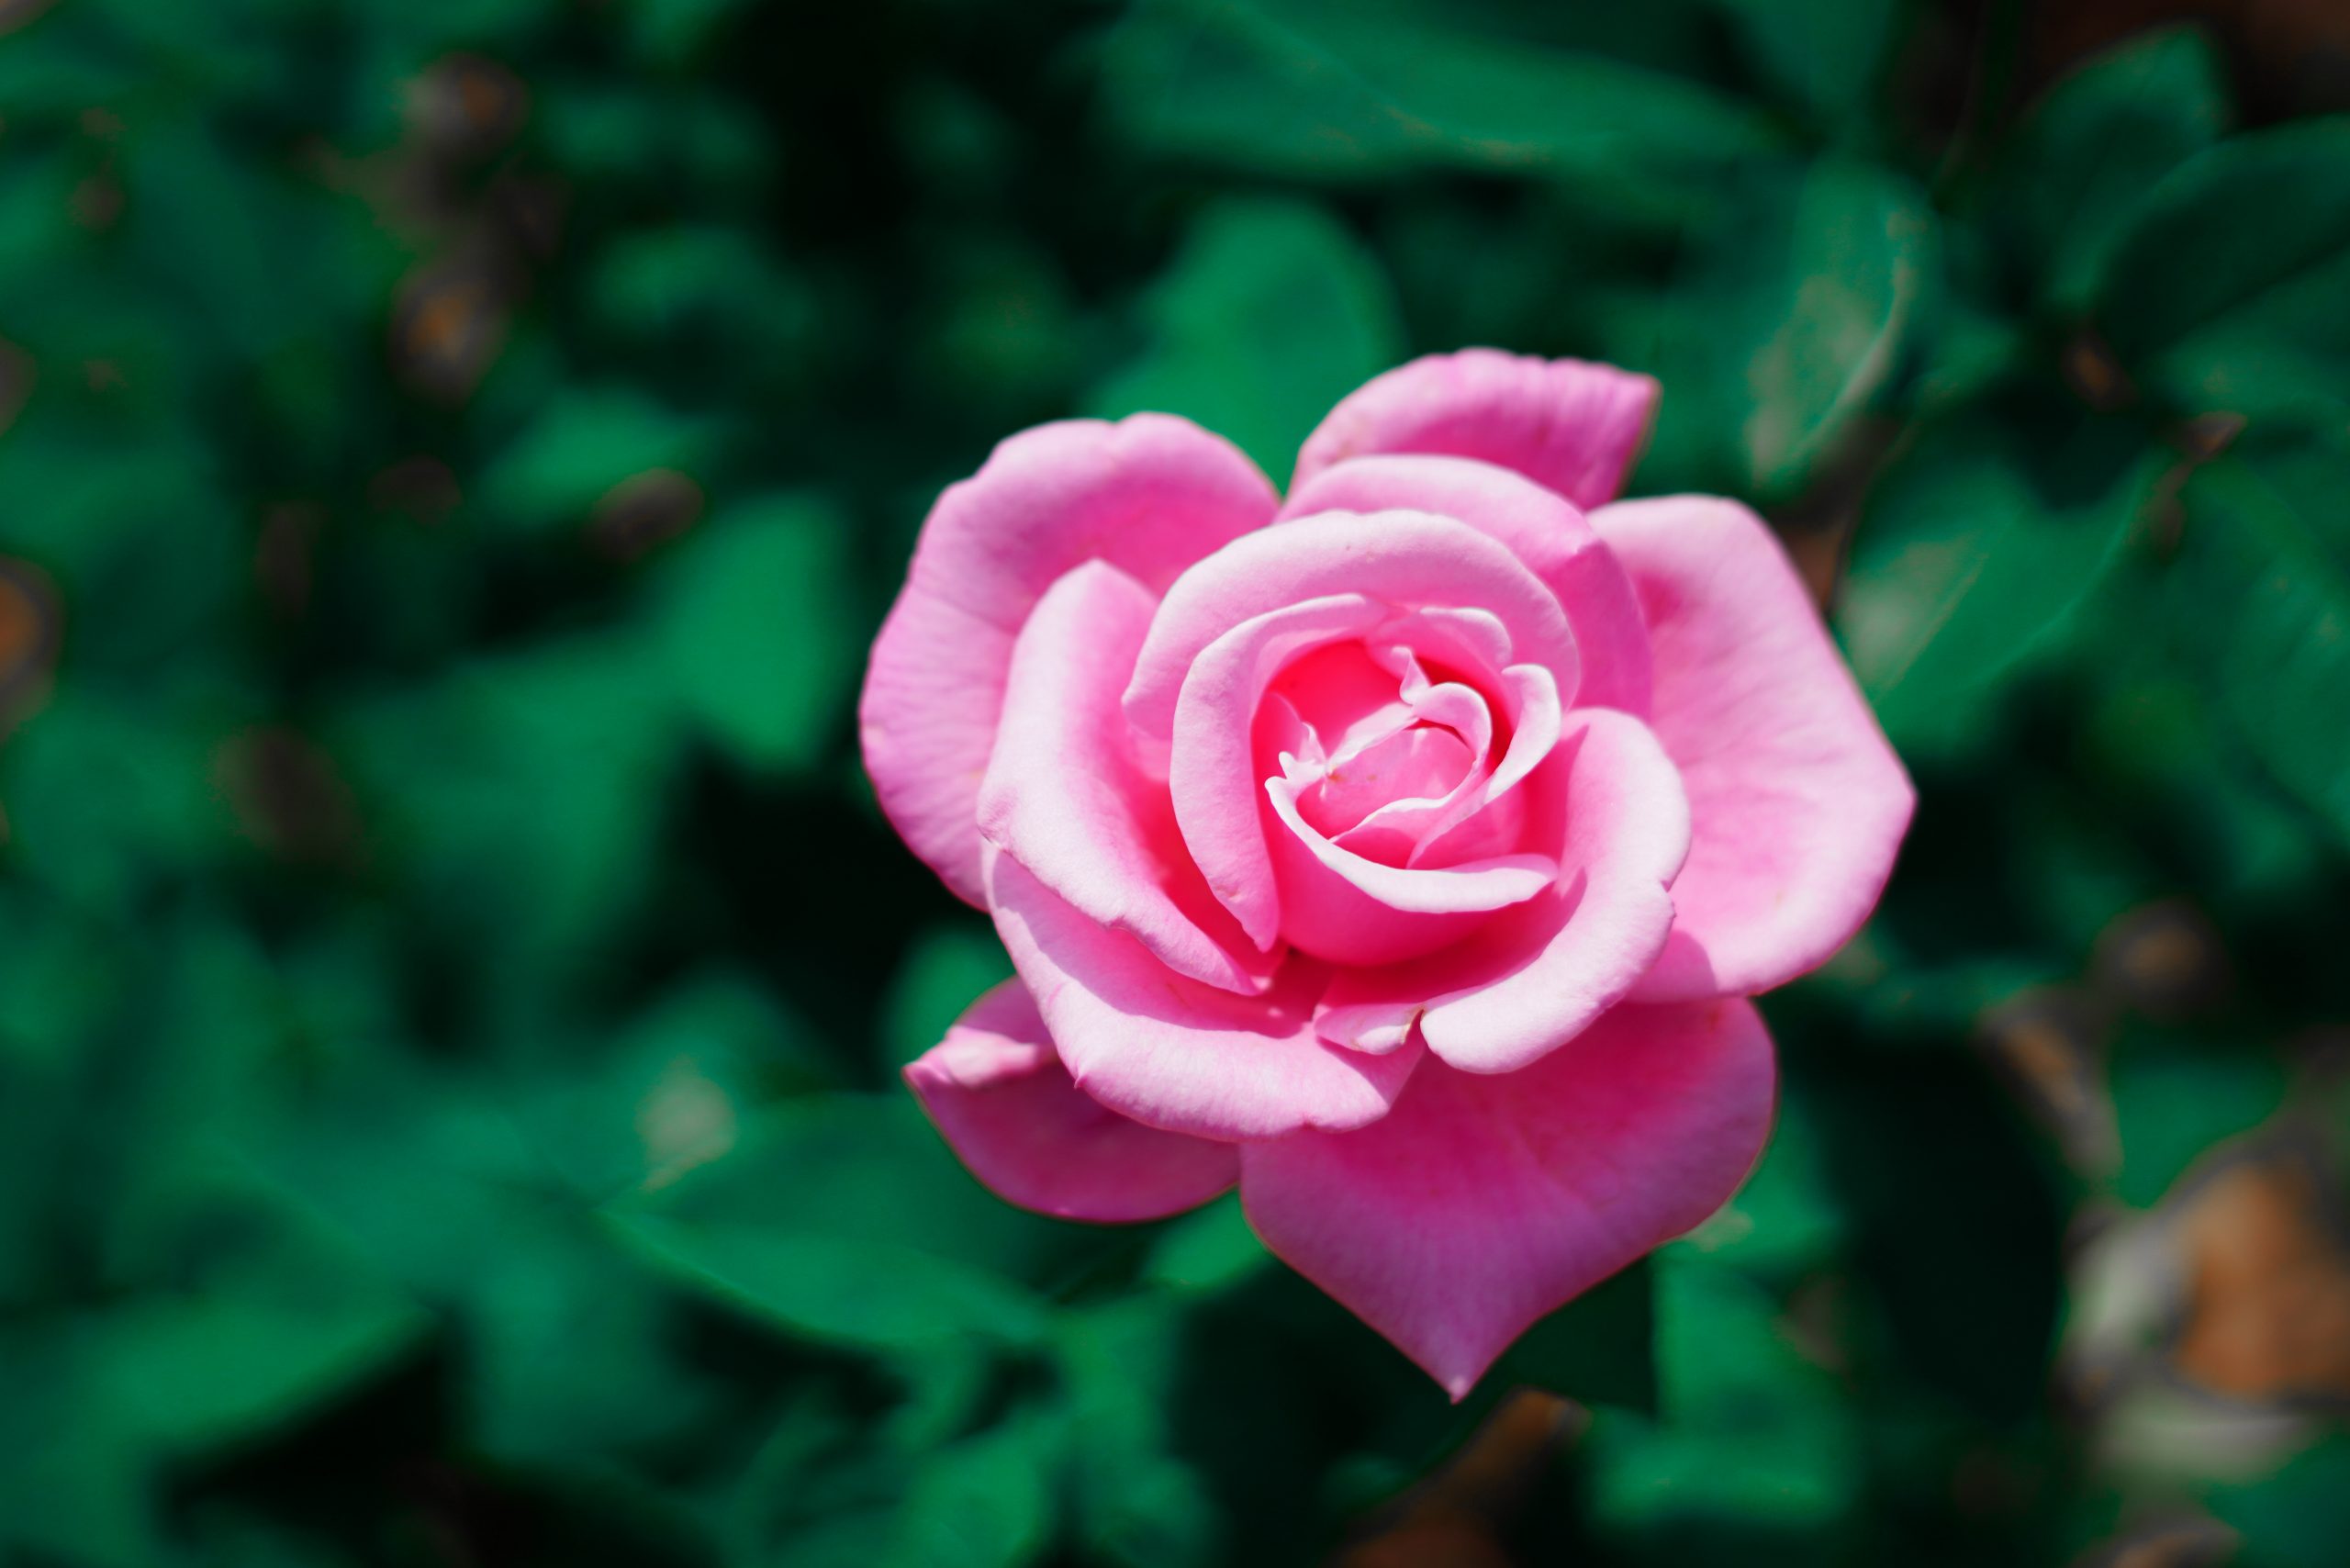 A light pink rose